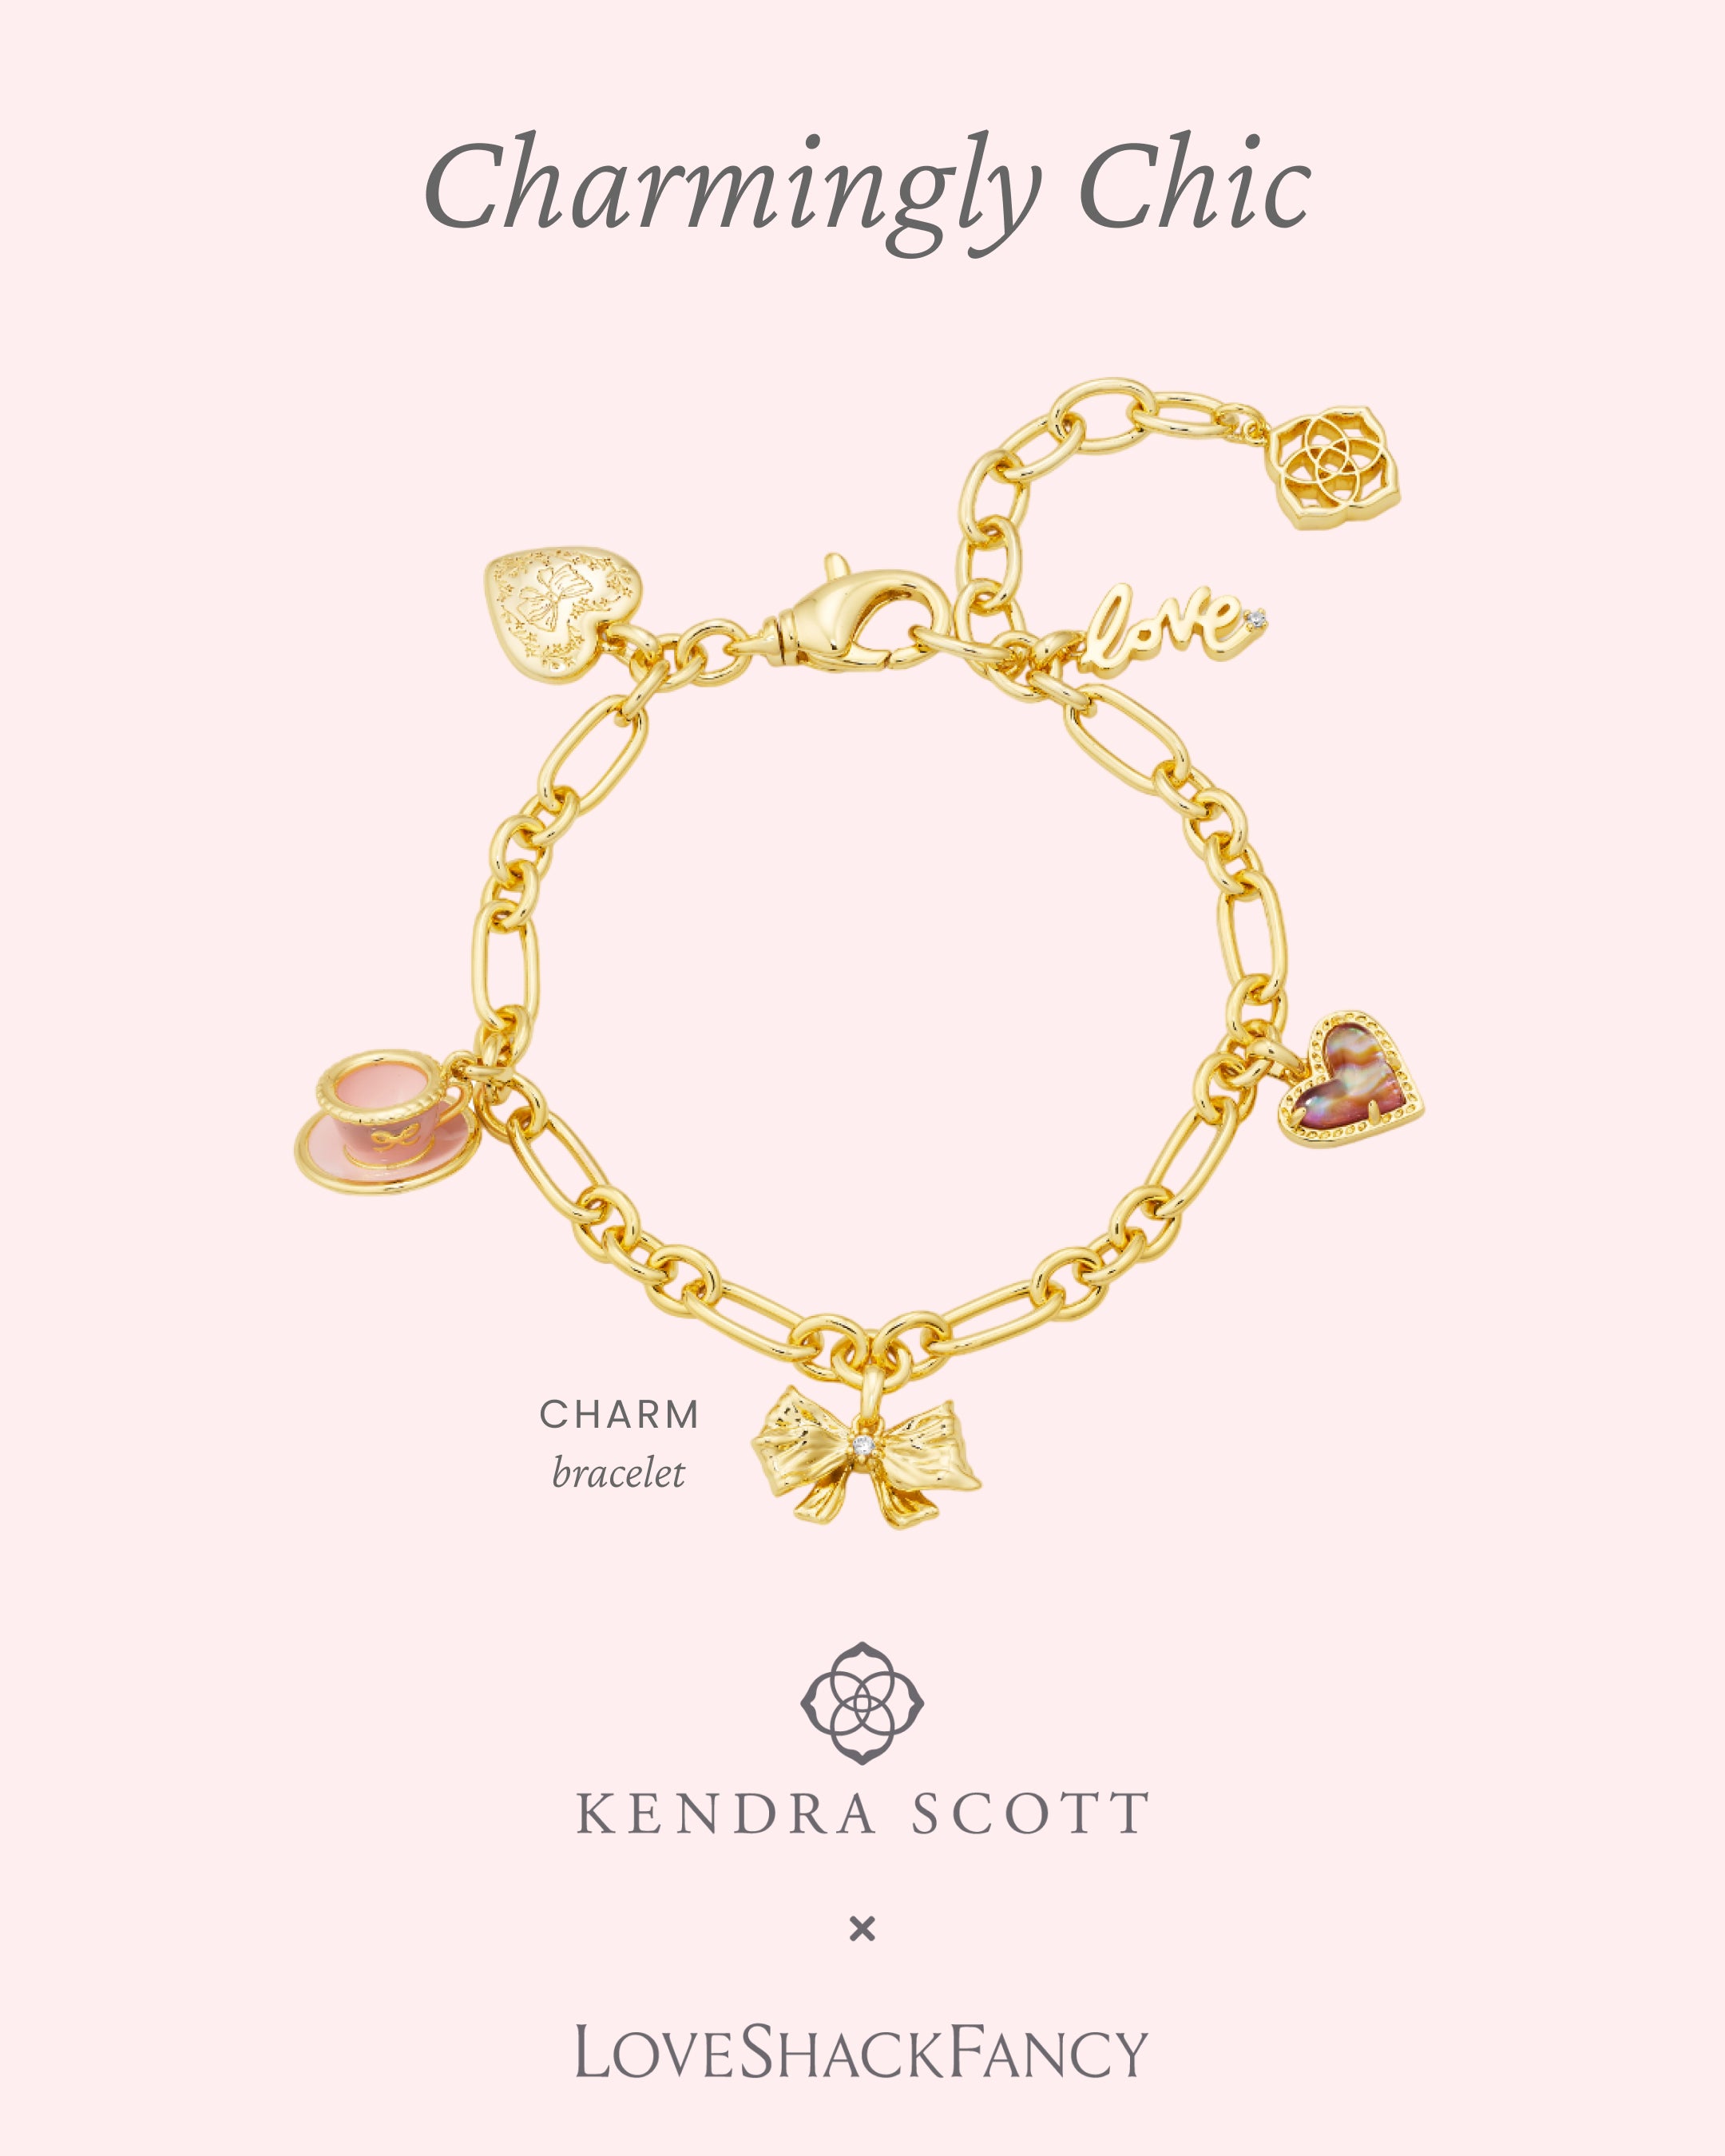 Charm bracelet from the Kendra Scott x LoveShackFancy collaboration